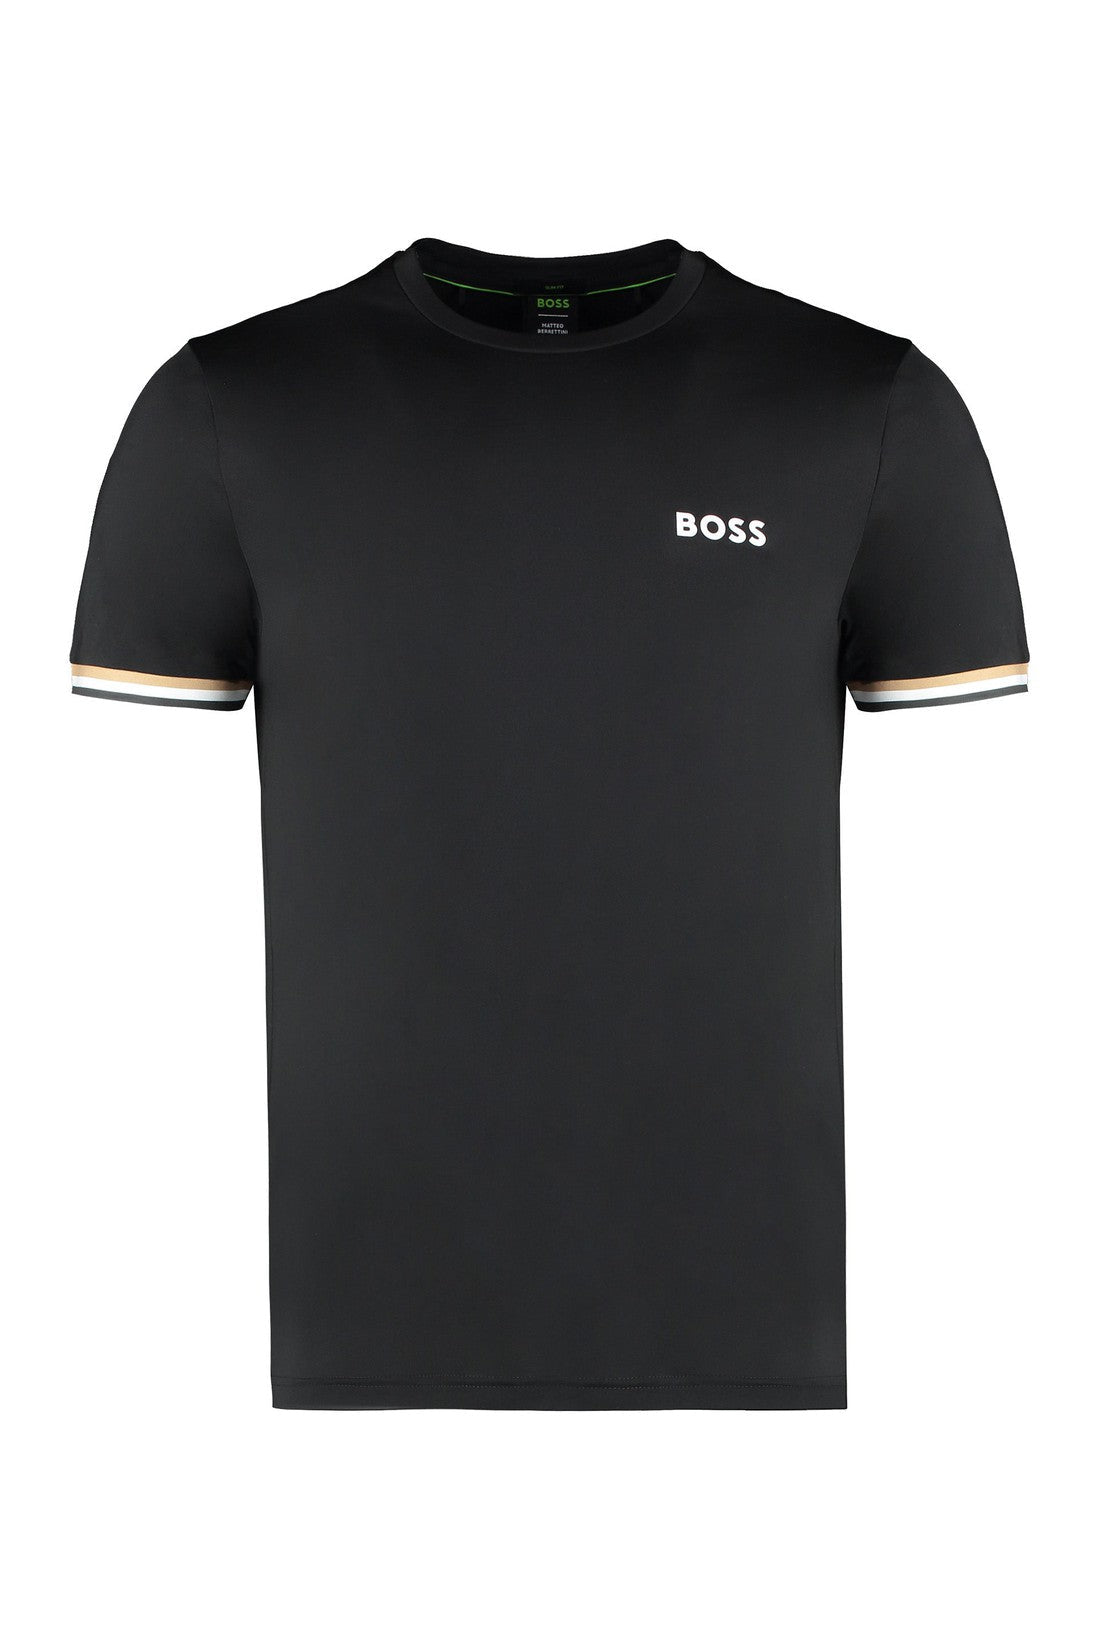 BOSS-OUTLET-SALE-BOSS x Matteo Berrettini - Techno fabric t-shirt-ARCHIVIST